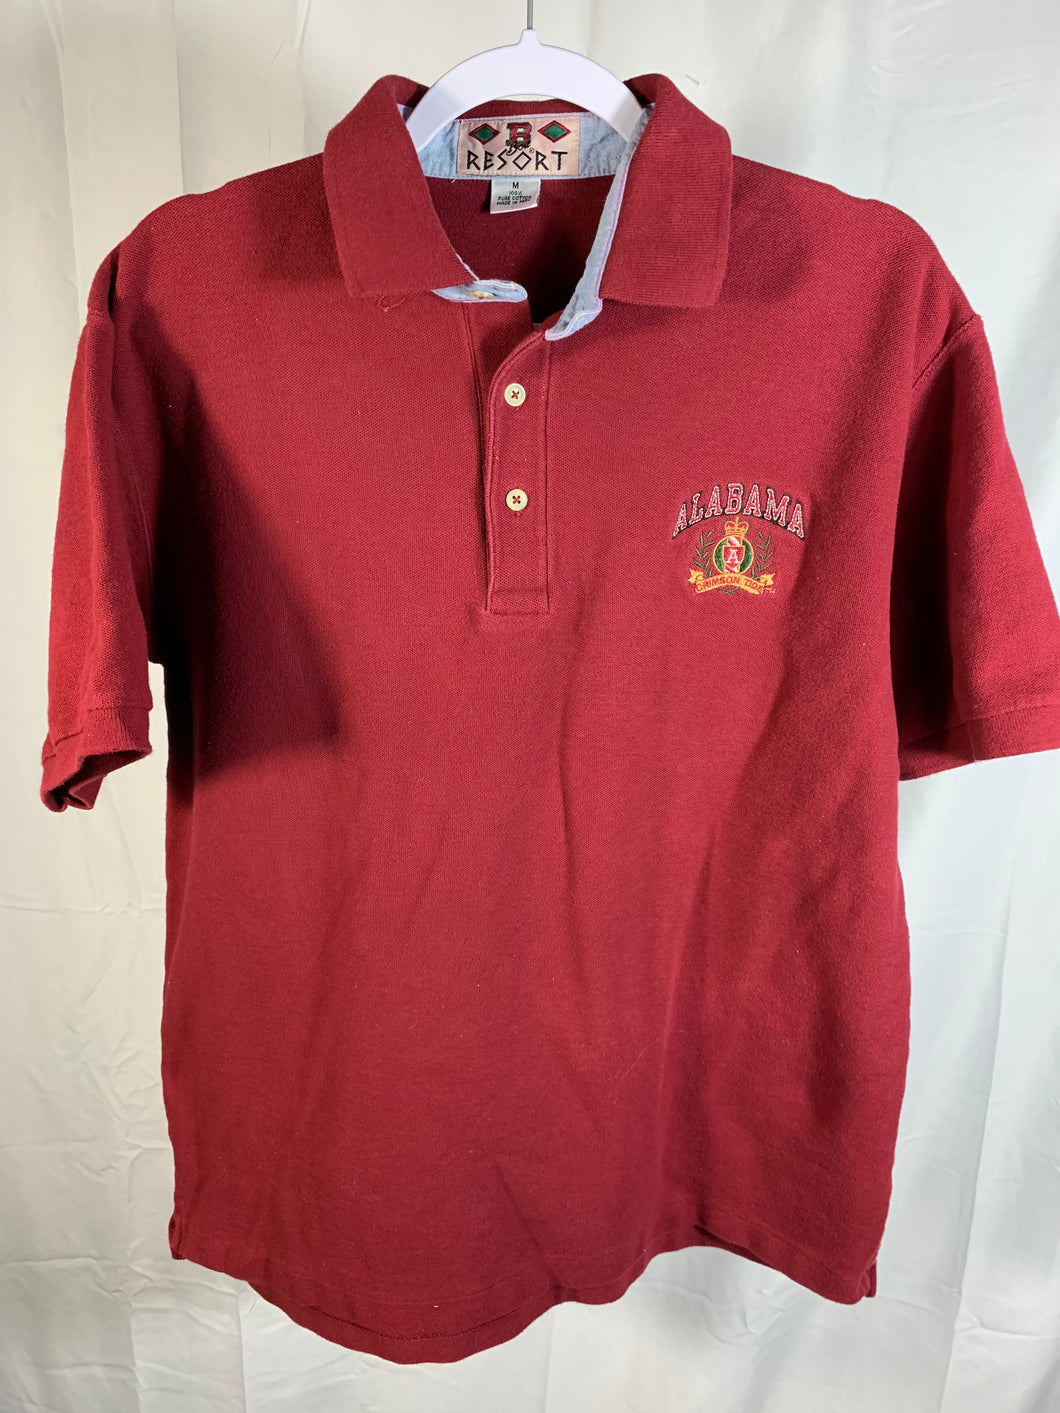 Vintage Alabama Polo Shirt Medium